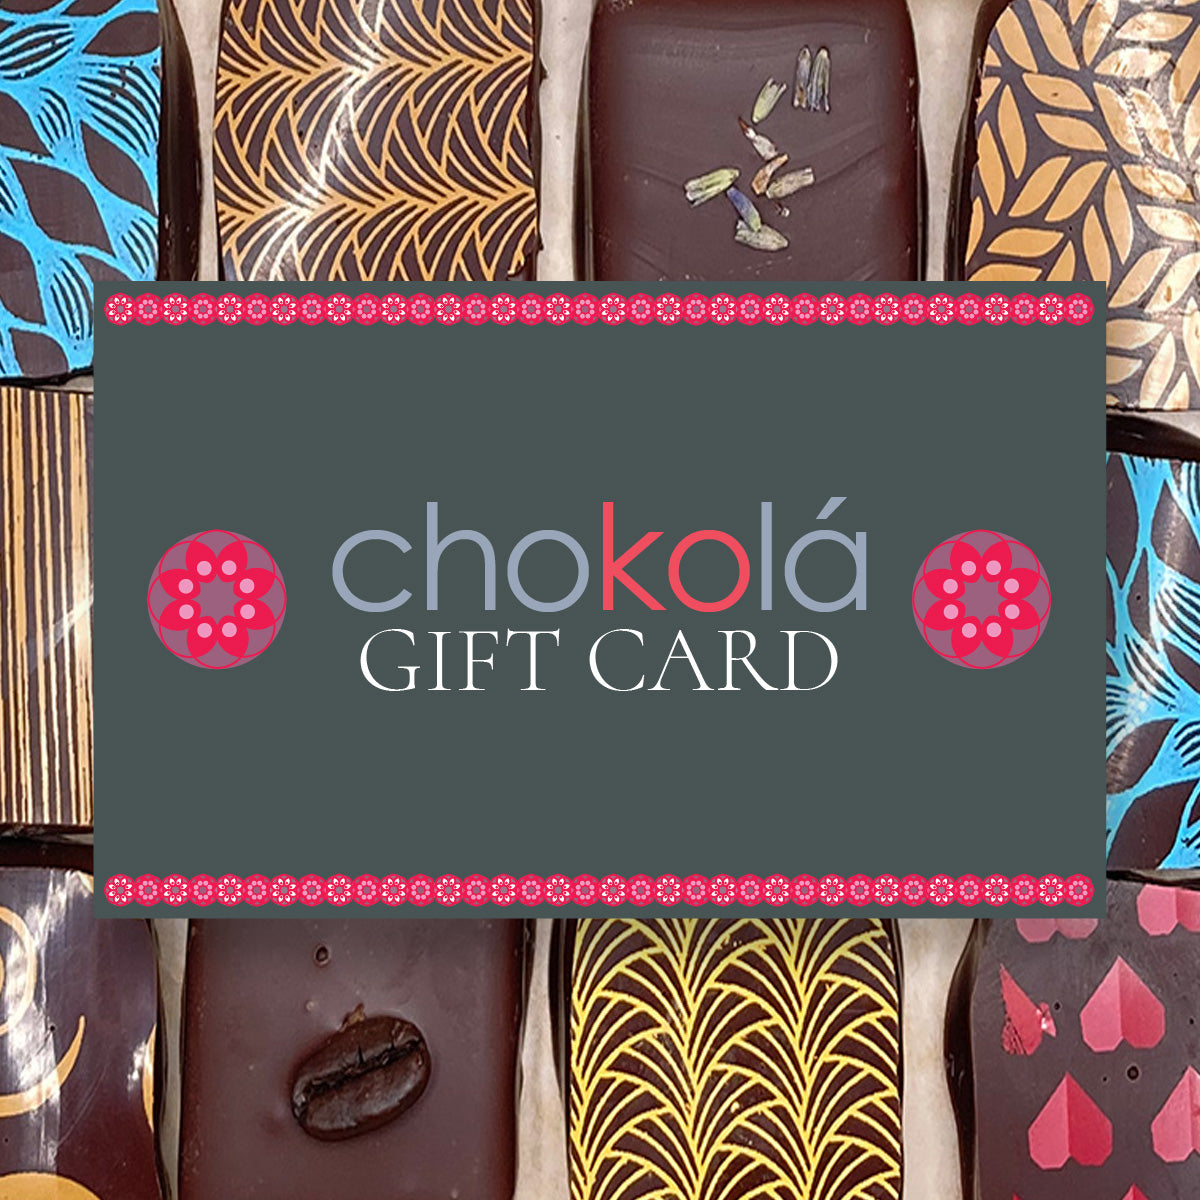 Chokola Gift Card